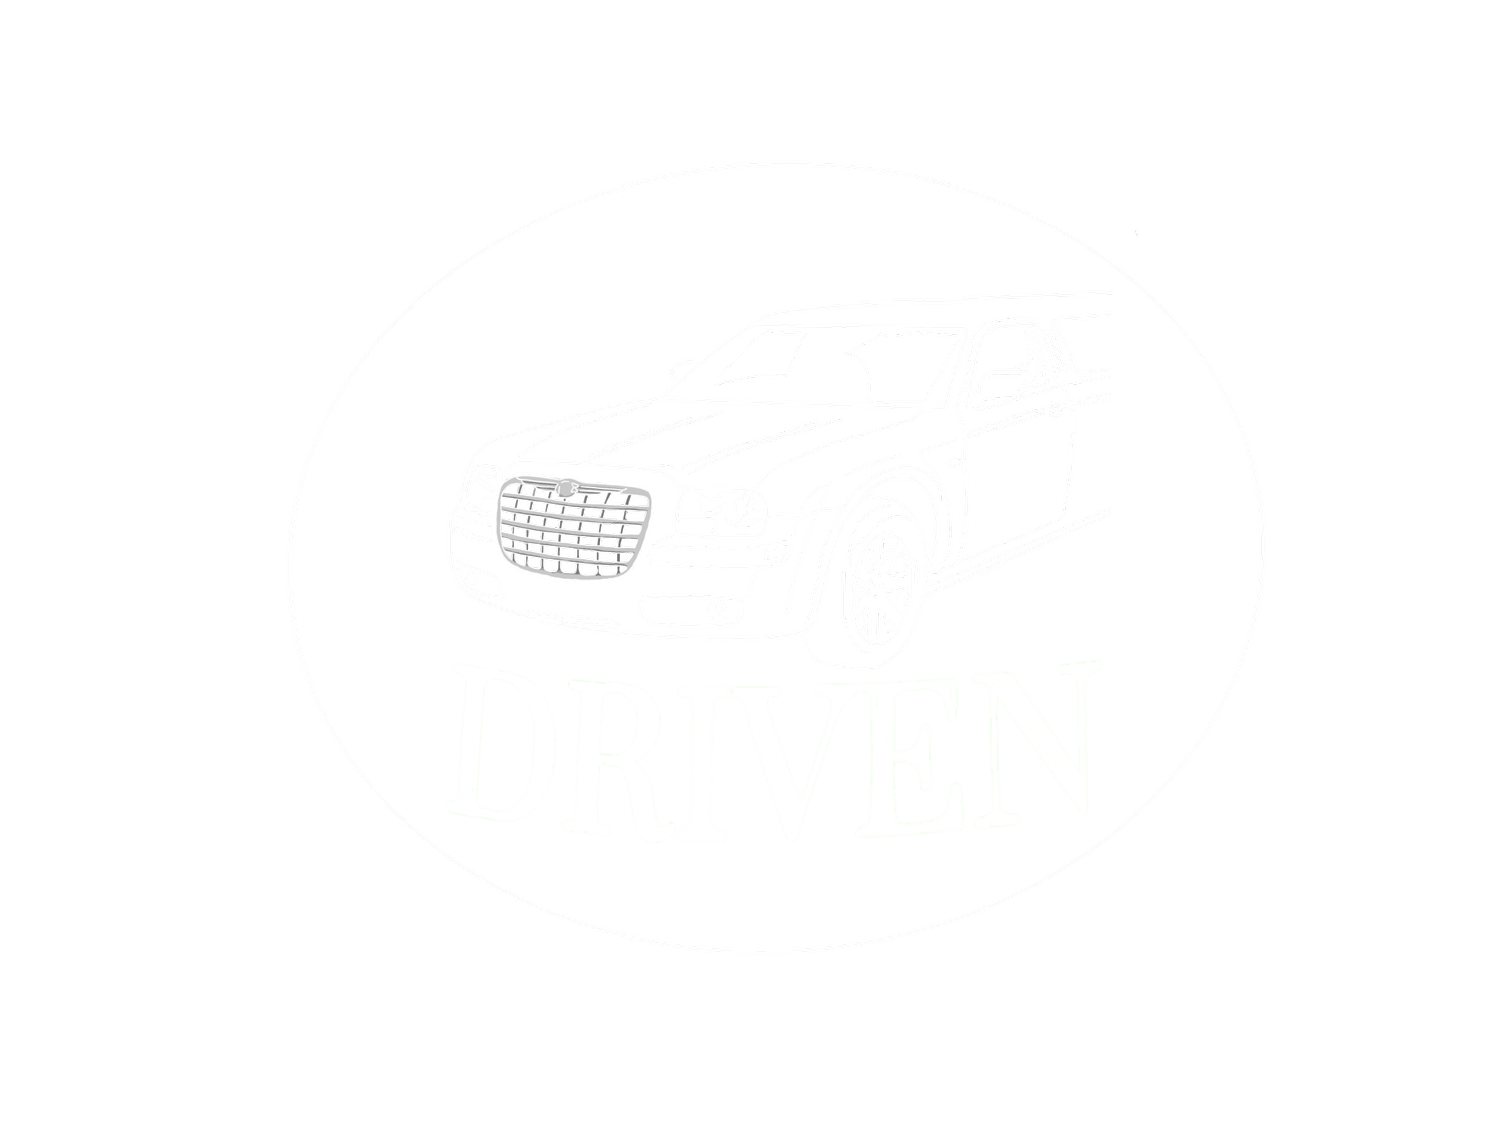 DRIVEN